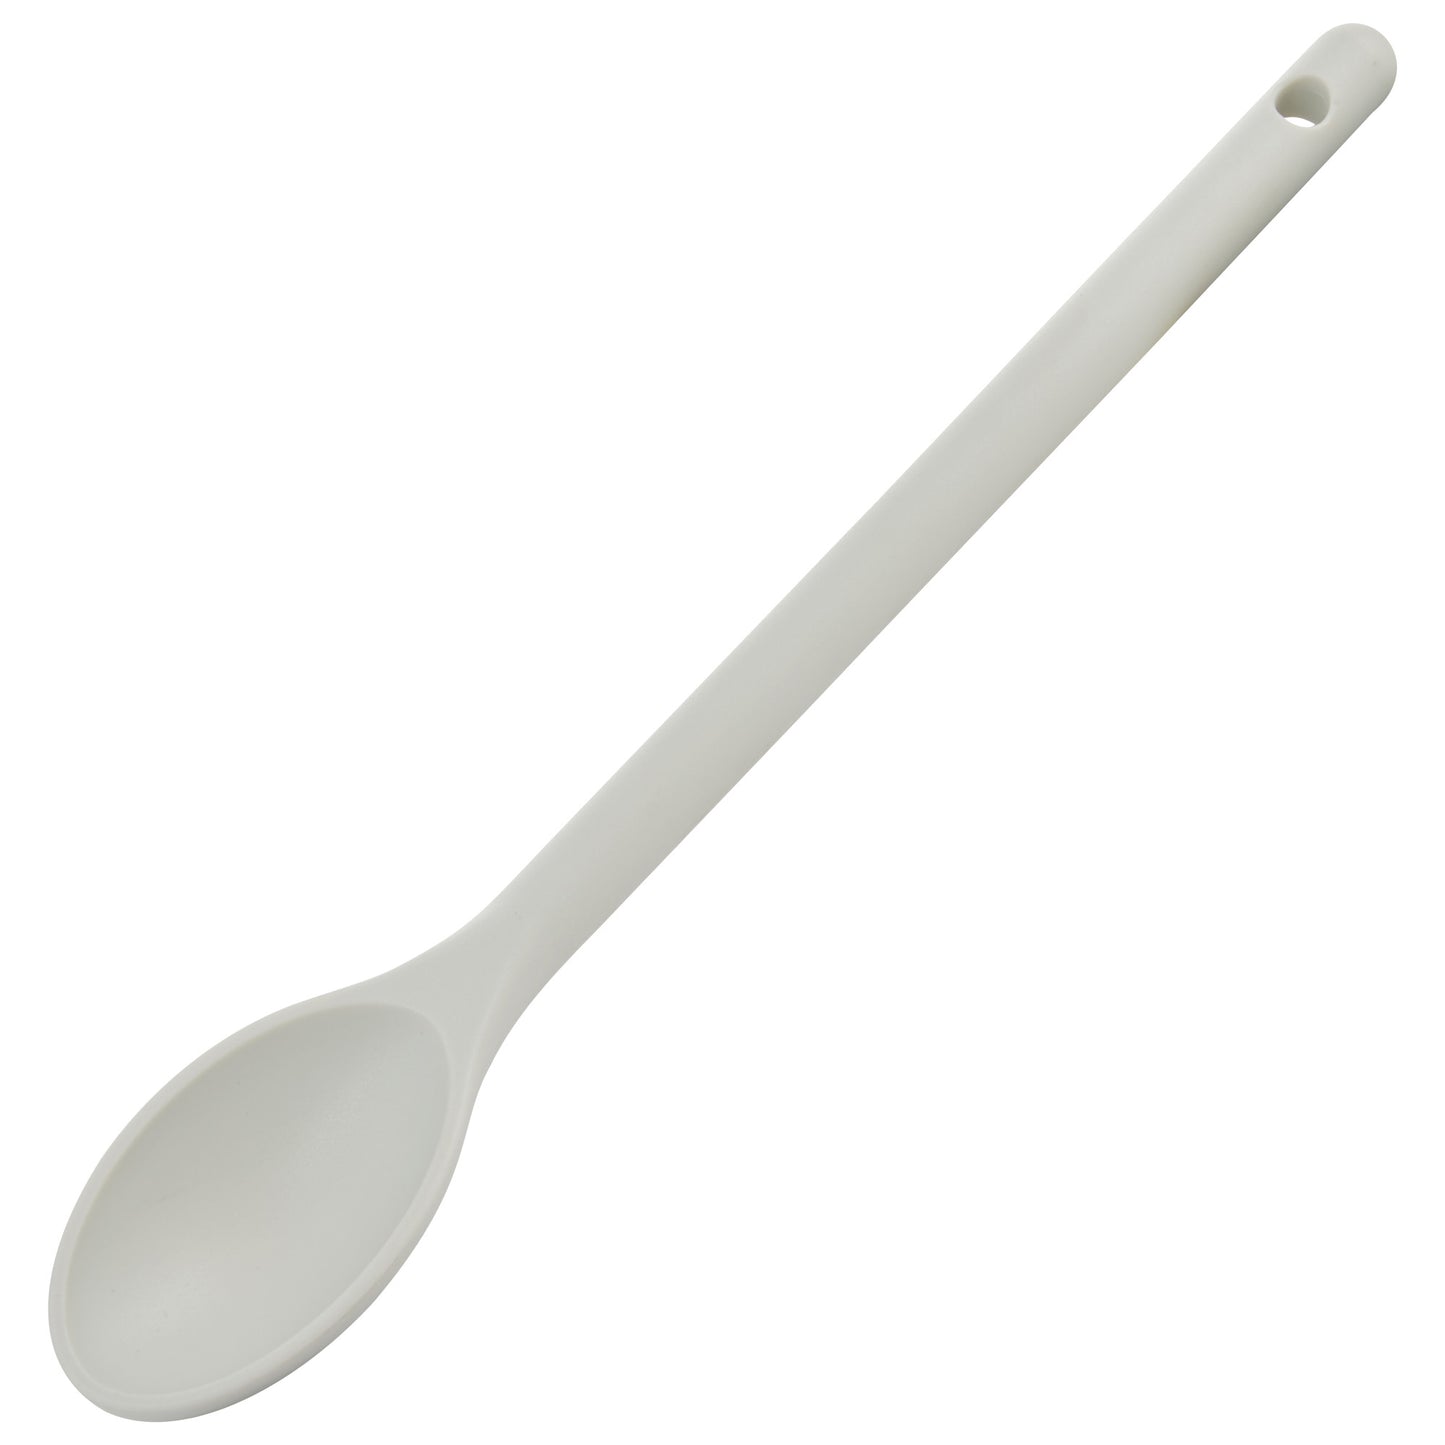 NS-12W - High Heat Nylon Spoon - 12", Off White